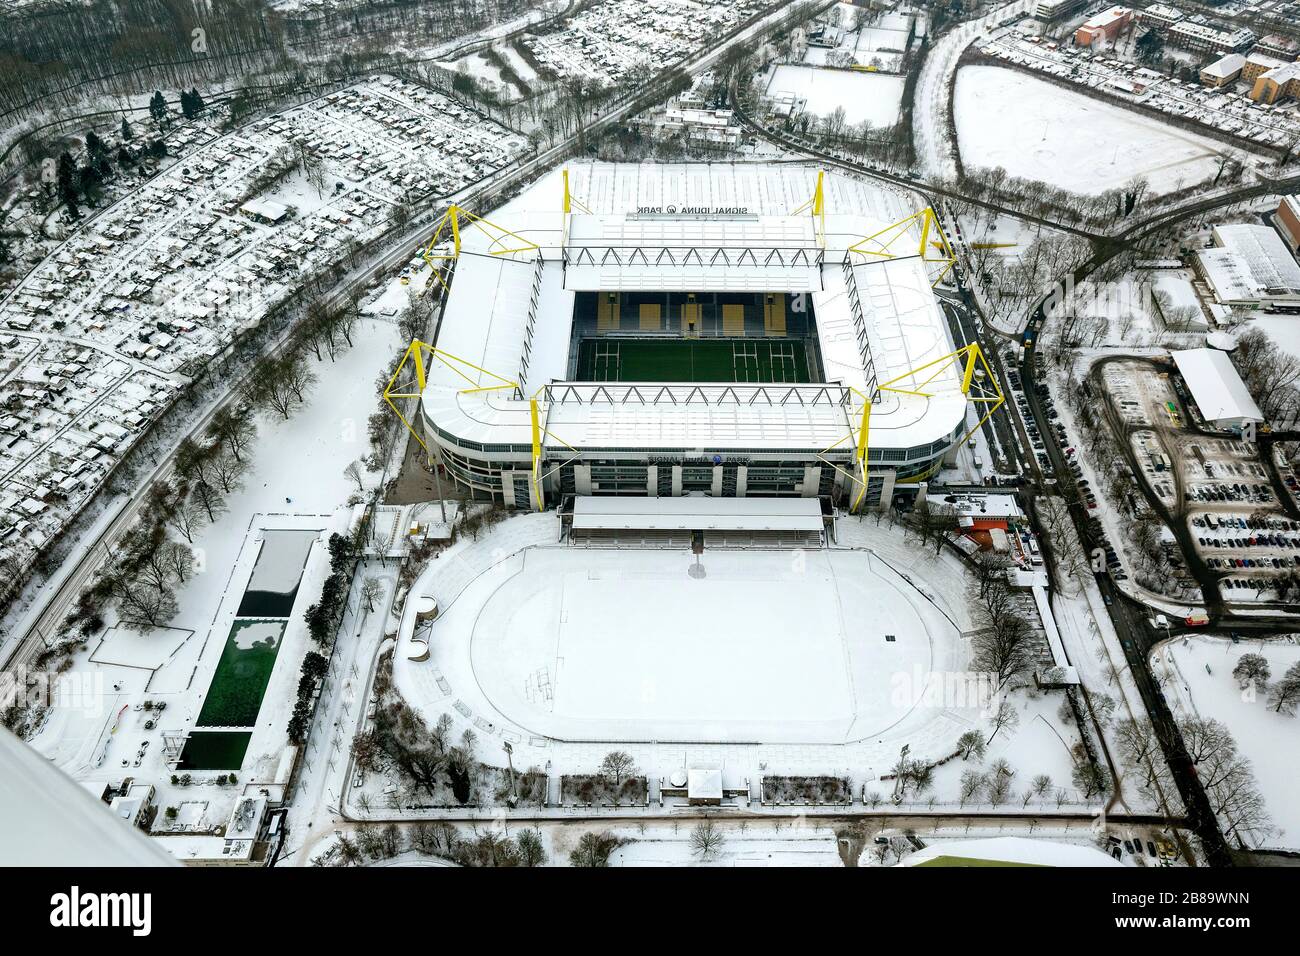 , snow-covered soccer stadium Westfalenstadion of Dortmund BVB, 19.01.2013, aerial view, Germany, North Rhine-Westphalia, Ruhr Area, Dortmund Stock Photo